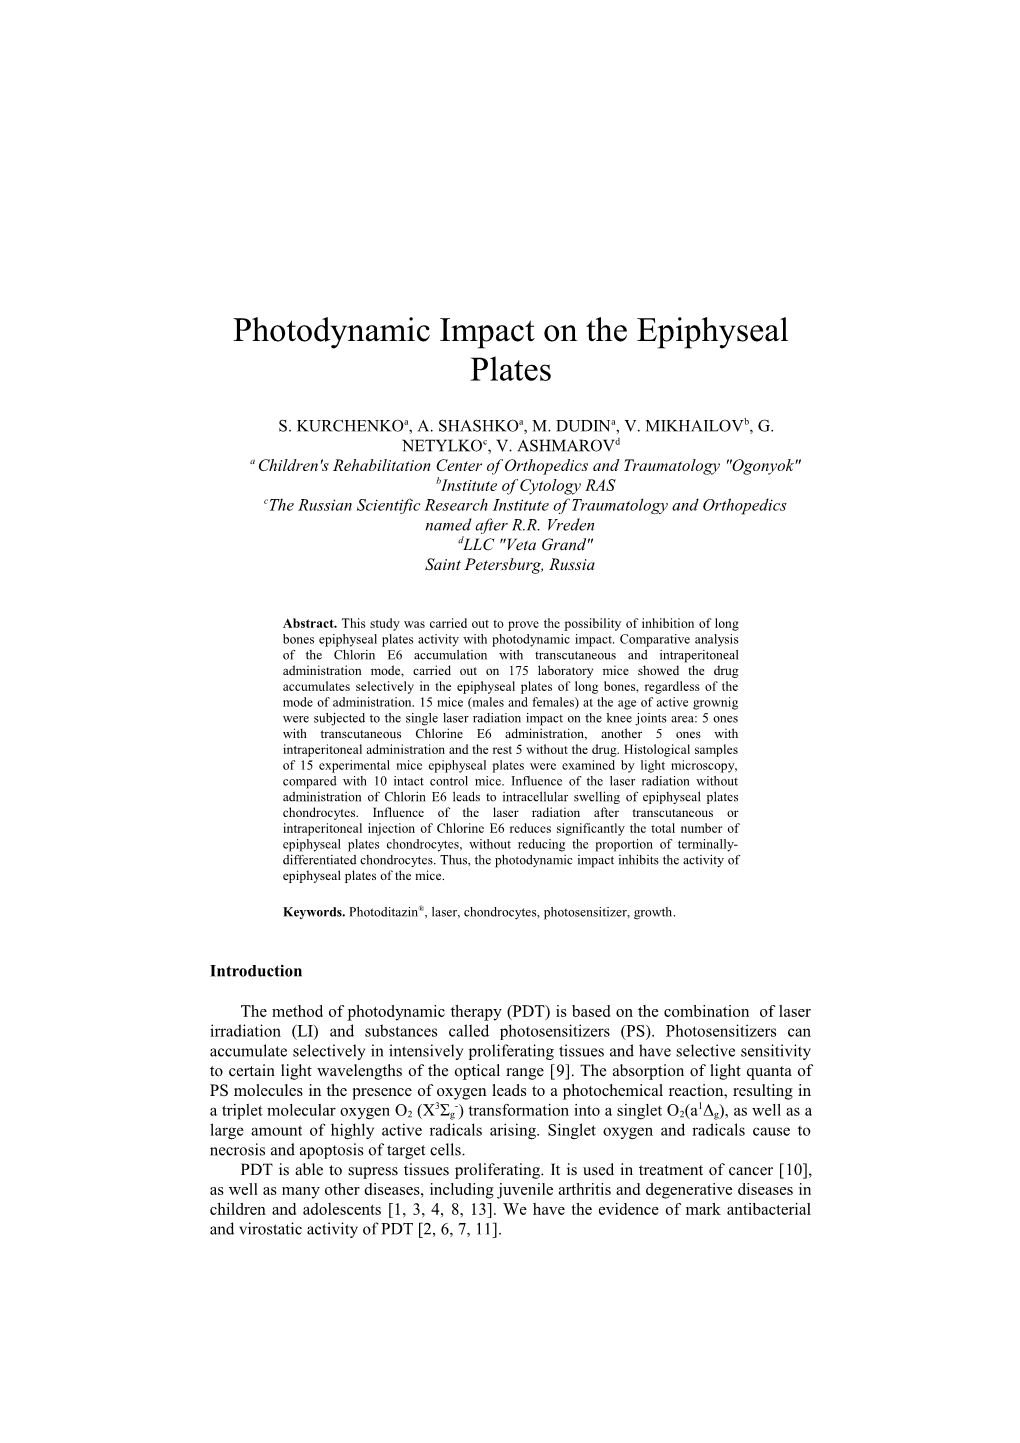 Photodynamic Impact on the Epiphyseal Plates